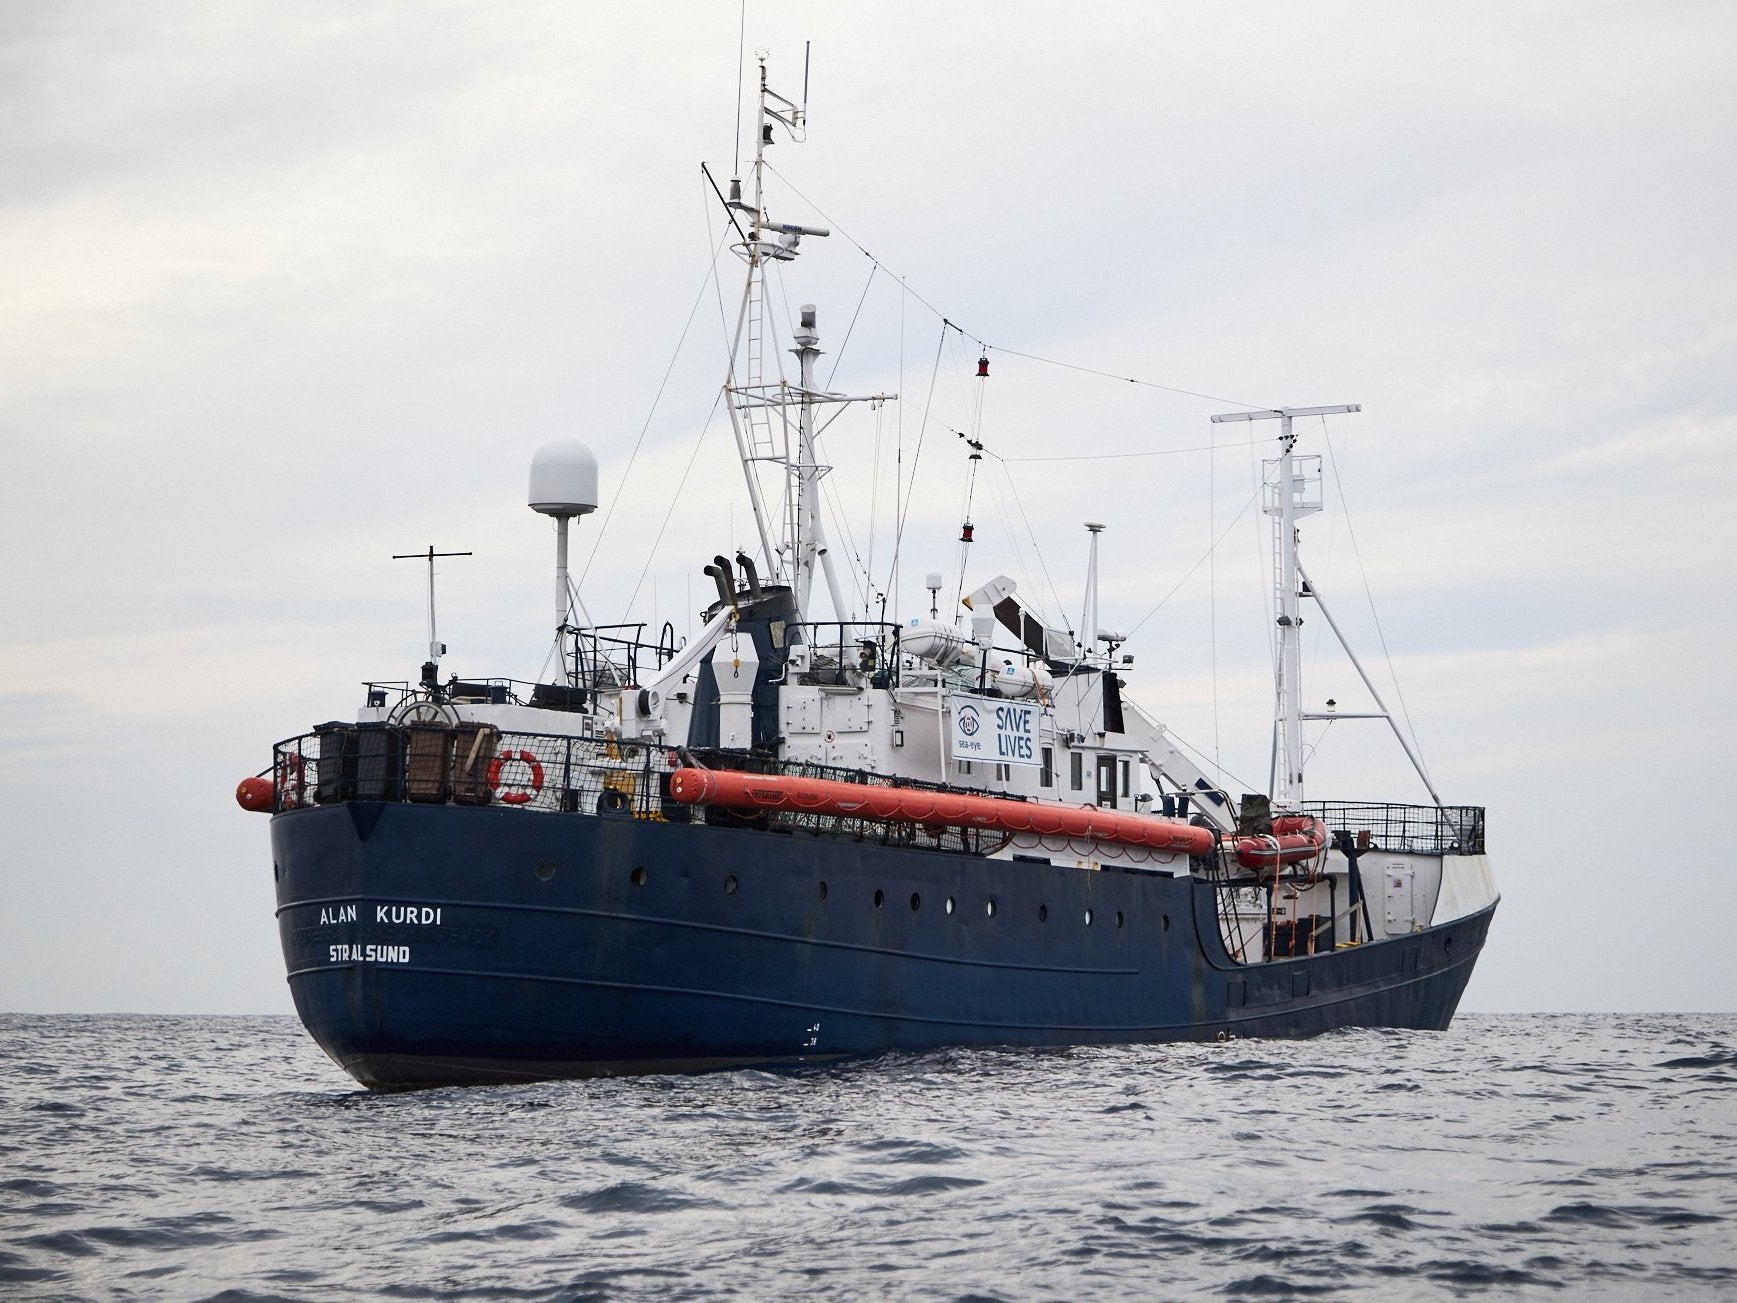 The Alan Kurdi vessel, run by the German charity Sea-Eye, sails in the Mediterranean sea